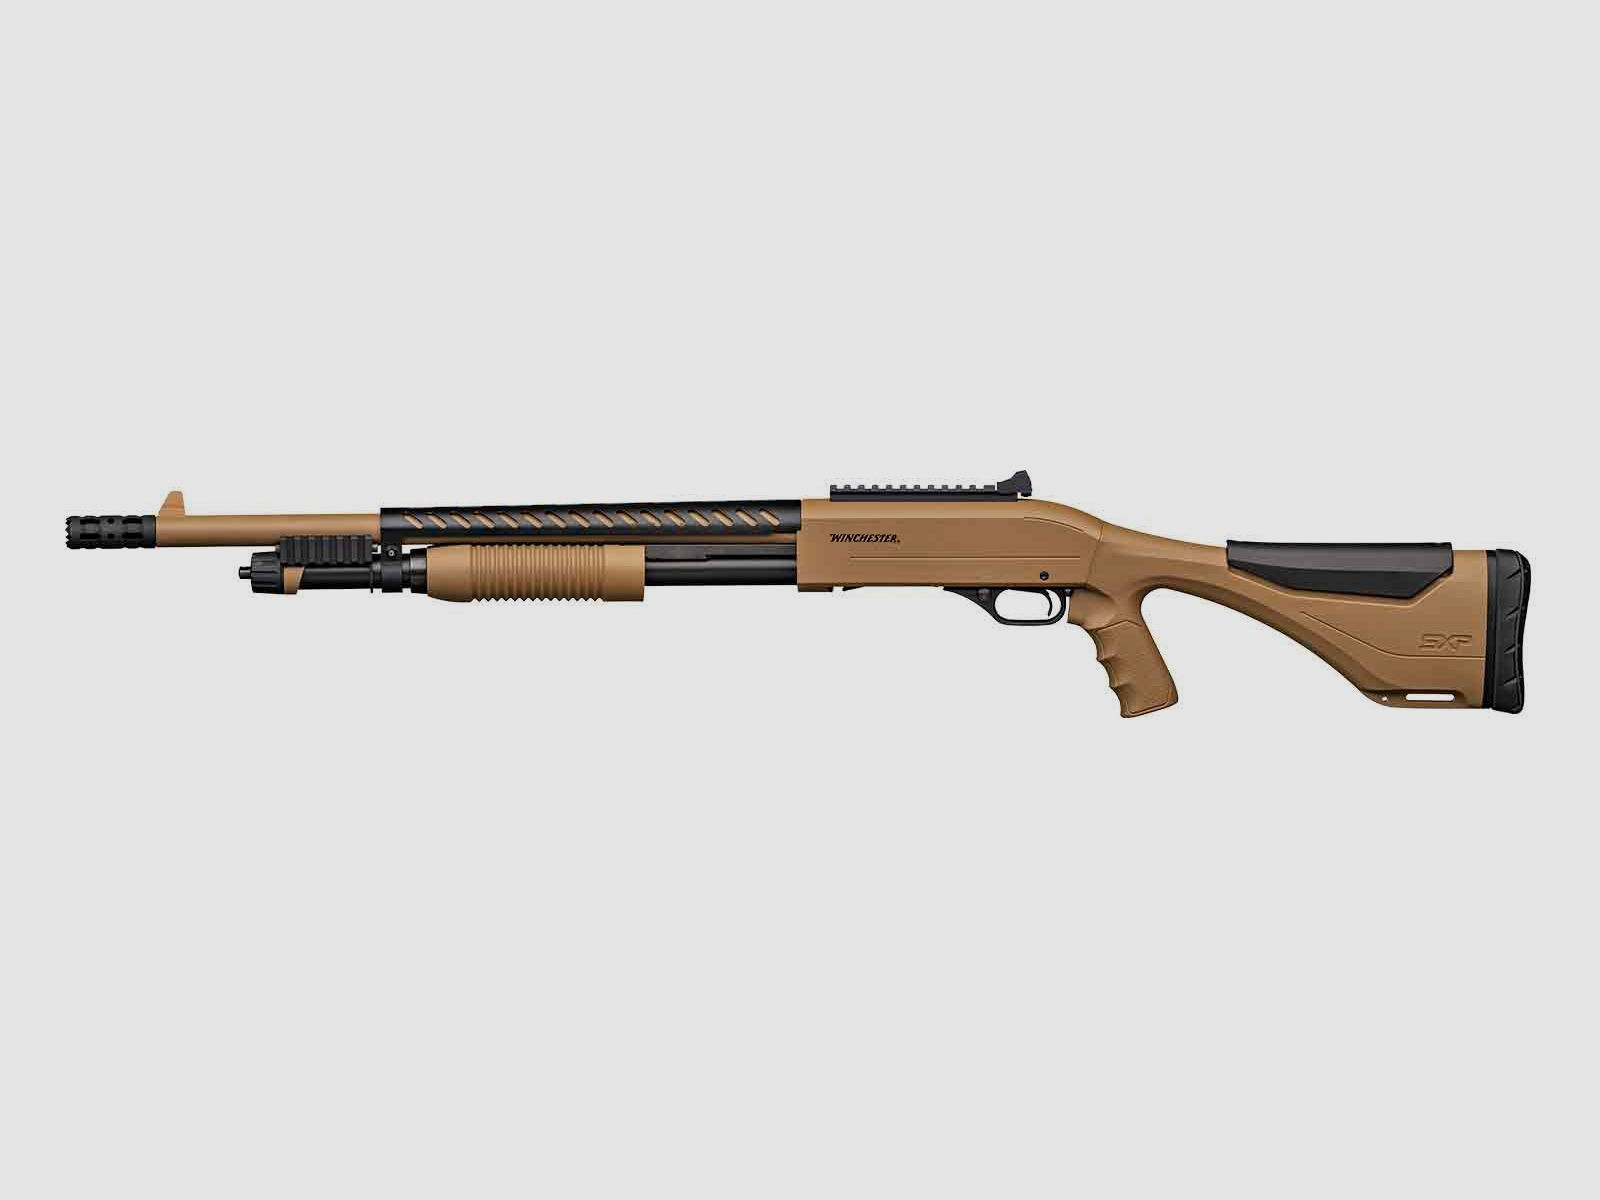 Winchester SXP Xtreme Dark Earth Defender .12/76 18" Vorderschaftrepetierflinte